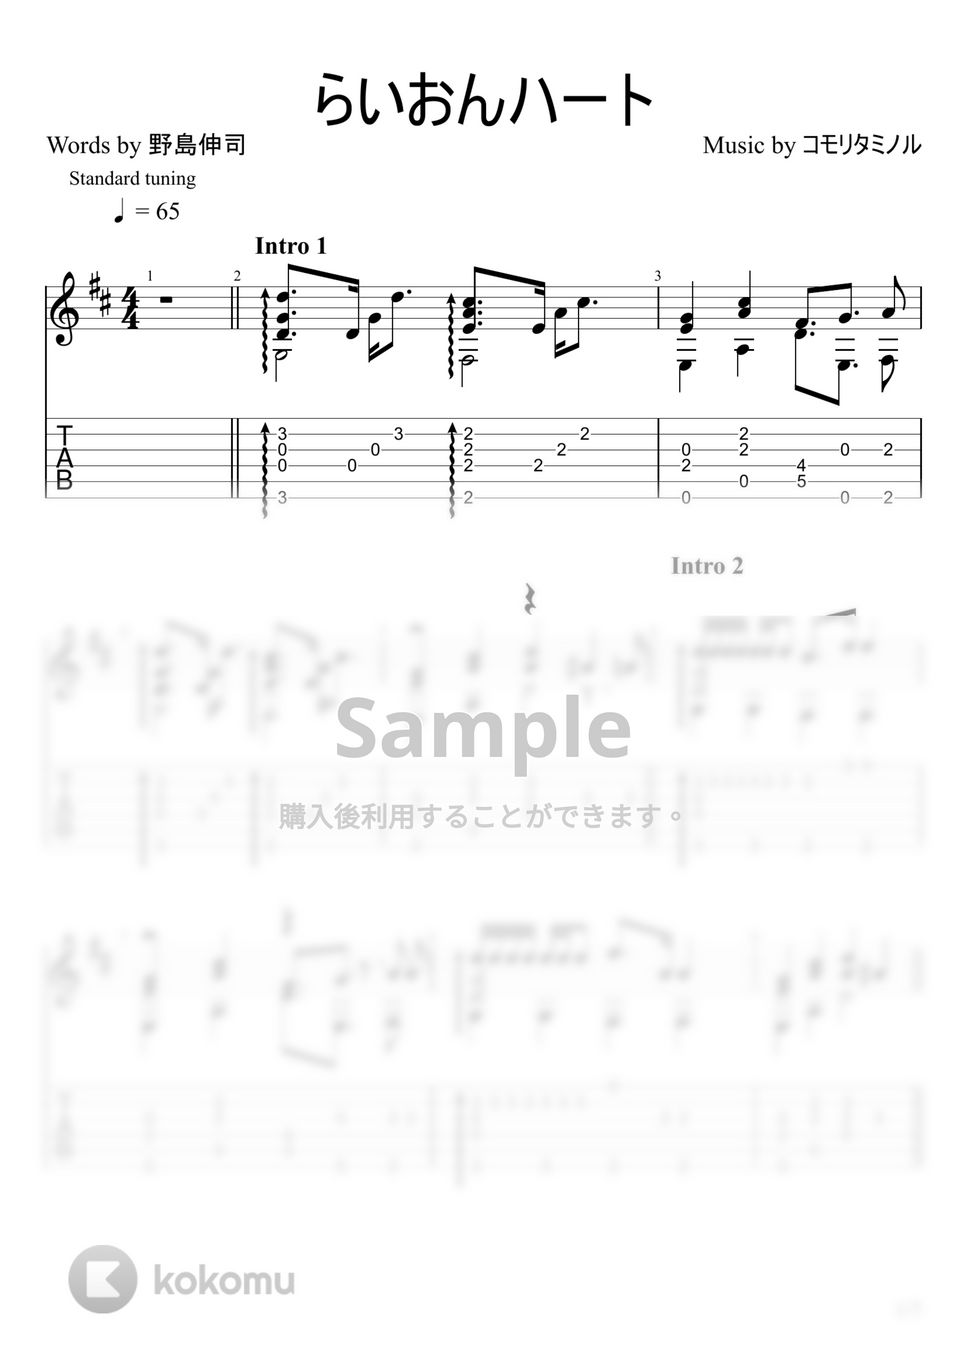 SMAP - らいおんハート (ソロギター) by u3danchou